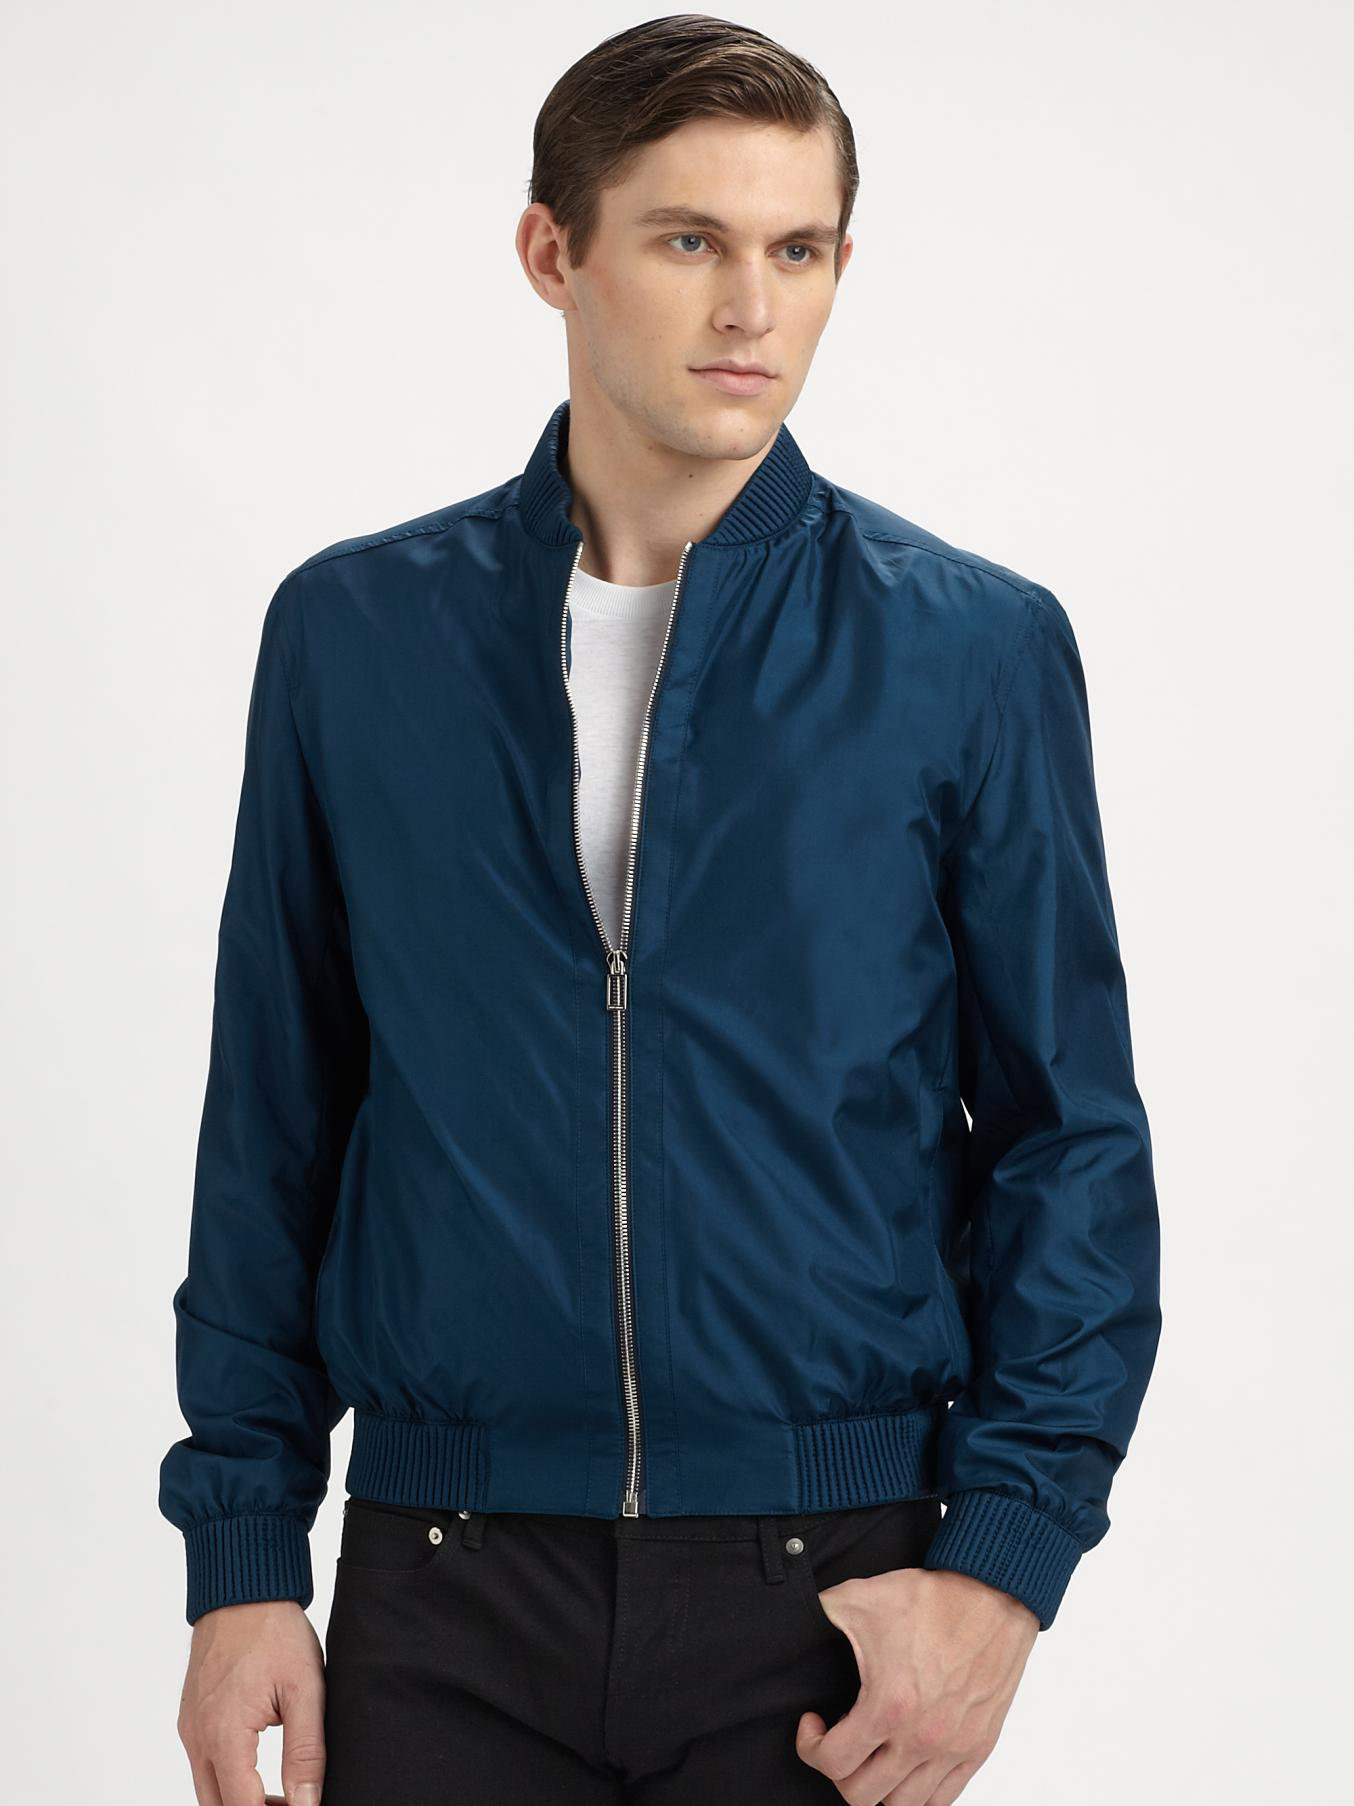 Dior homme Silk Bomber Jacket in Blue for Men | Lyst